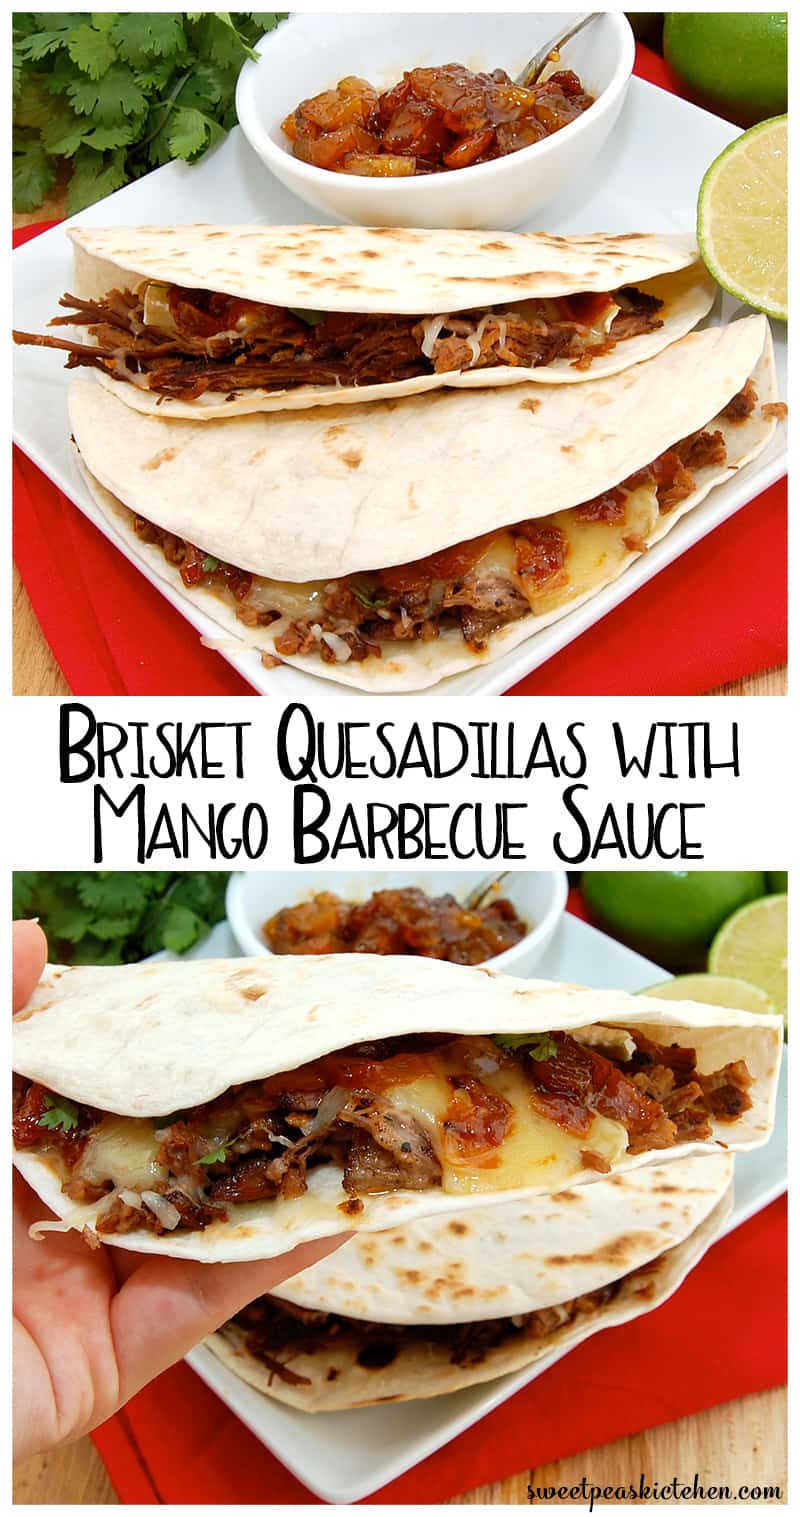 Brisket Quesadillas with Mango Barbecue Sauce - Sweet Pea's Kitchen